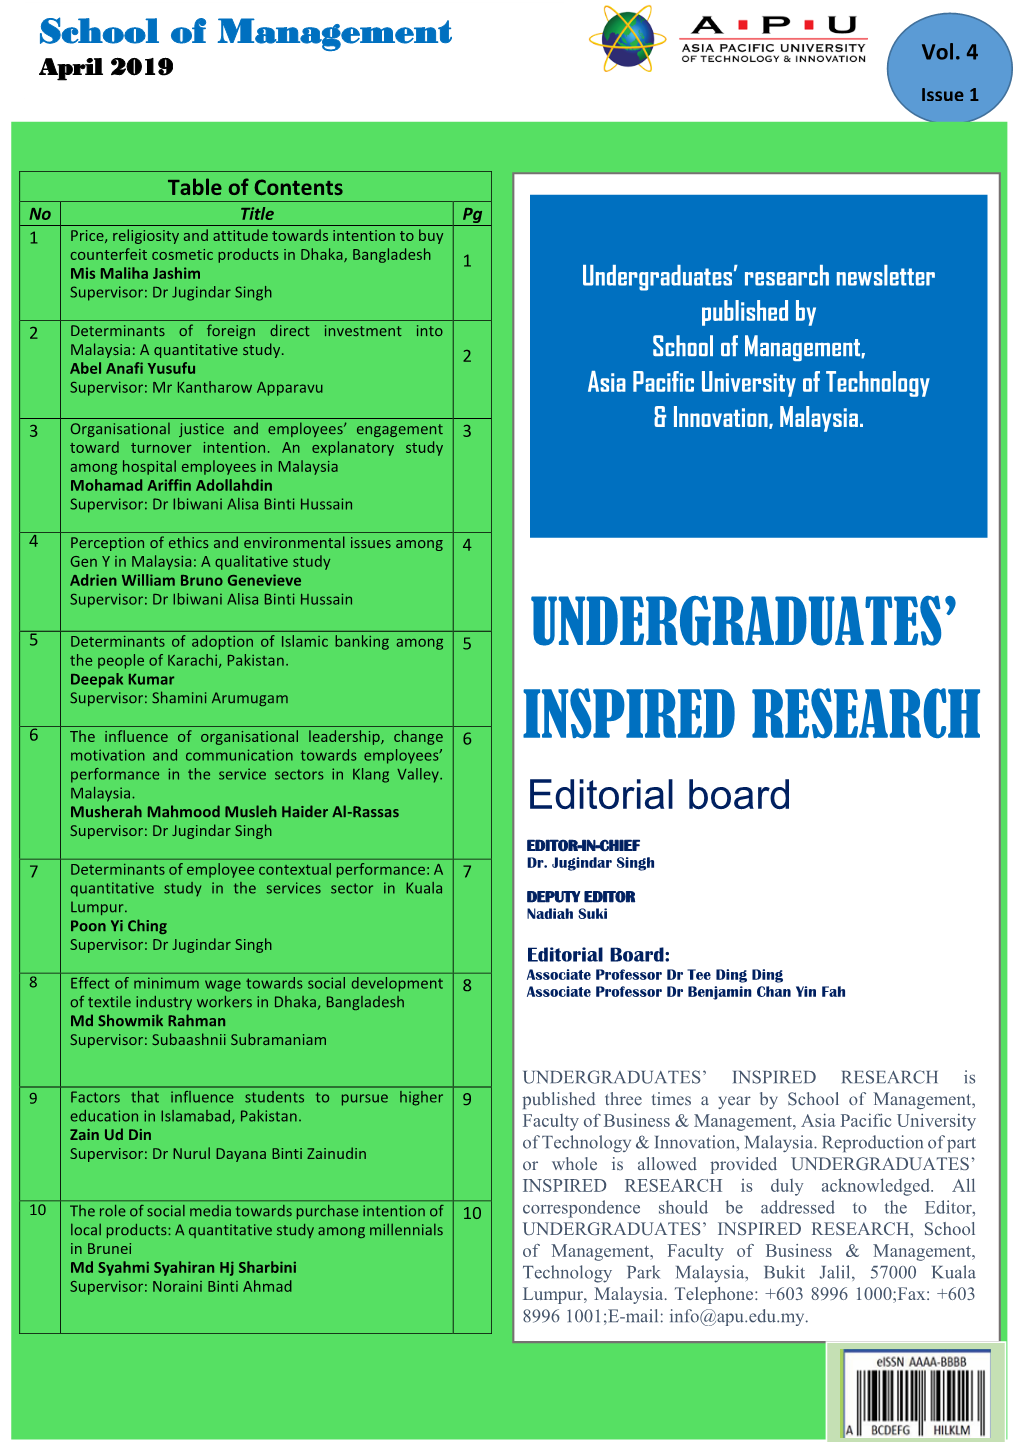 Undergraduates' Inspired Research